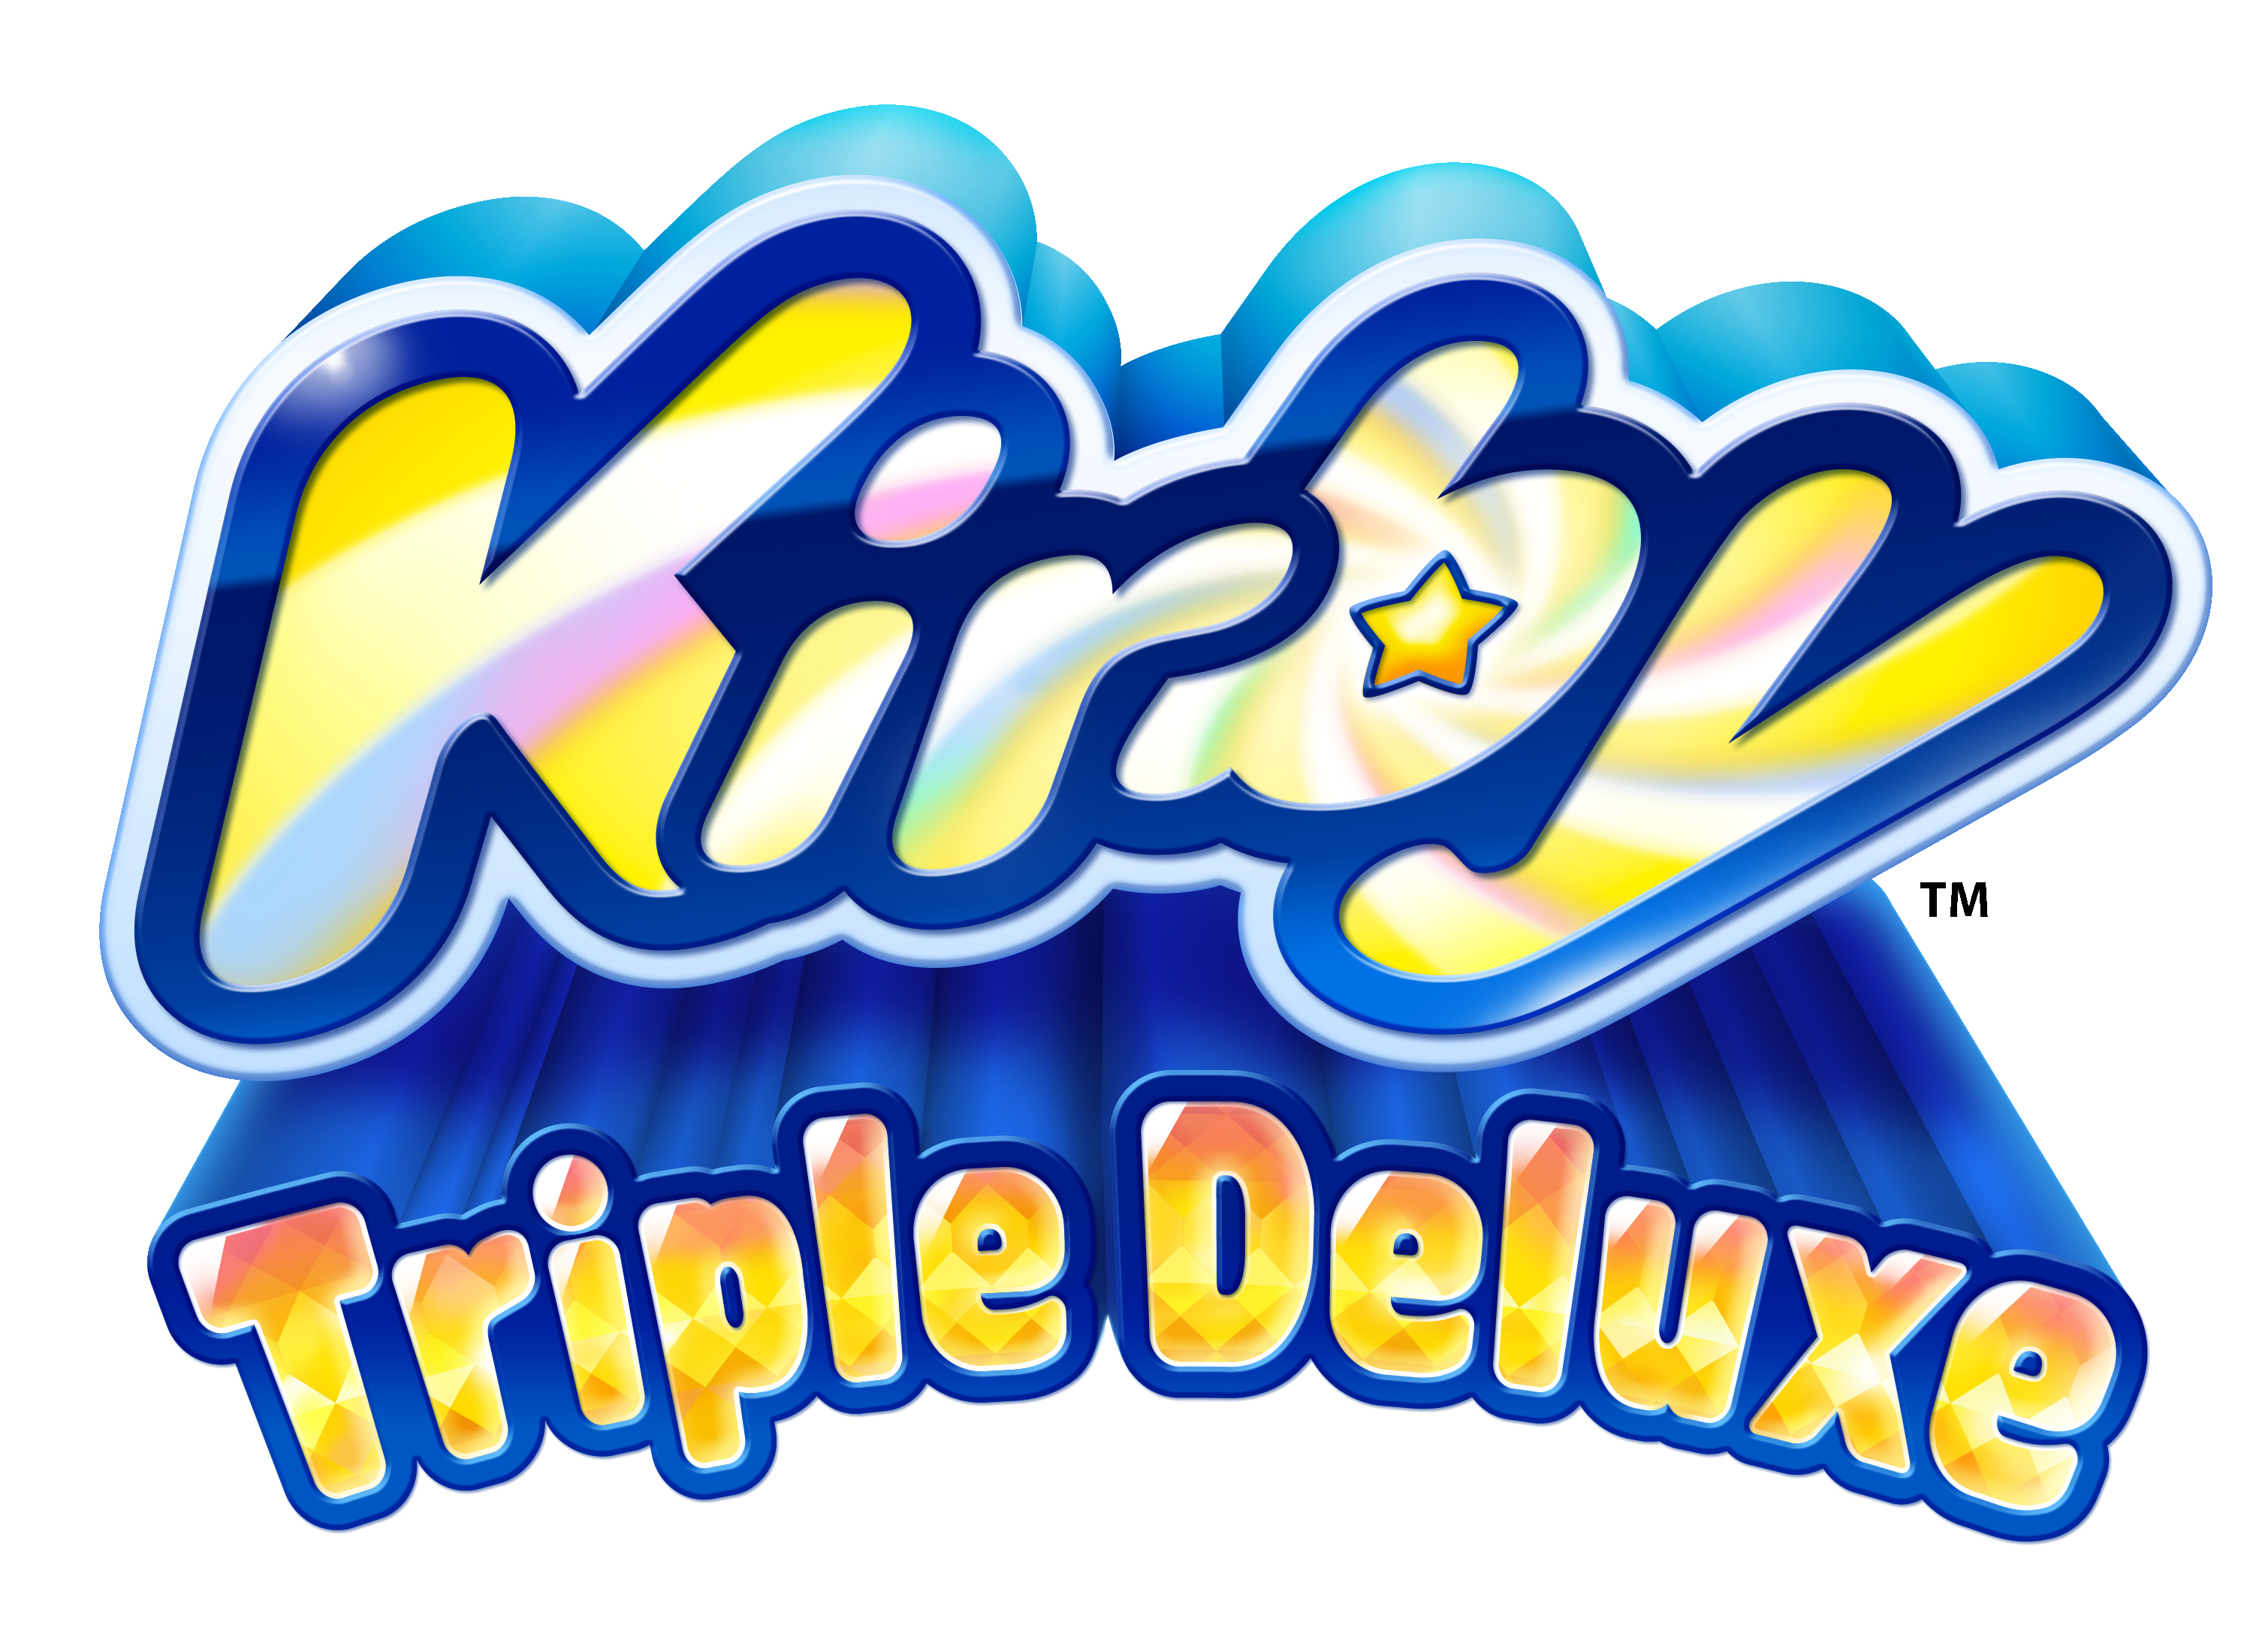 Actualizar 105+ imagen kirby triple deluxe logo